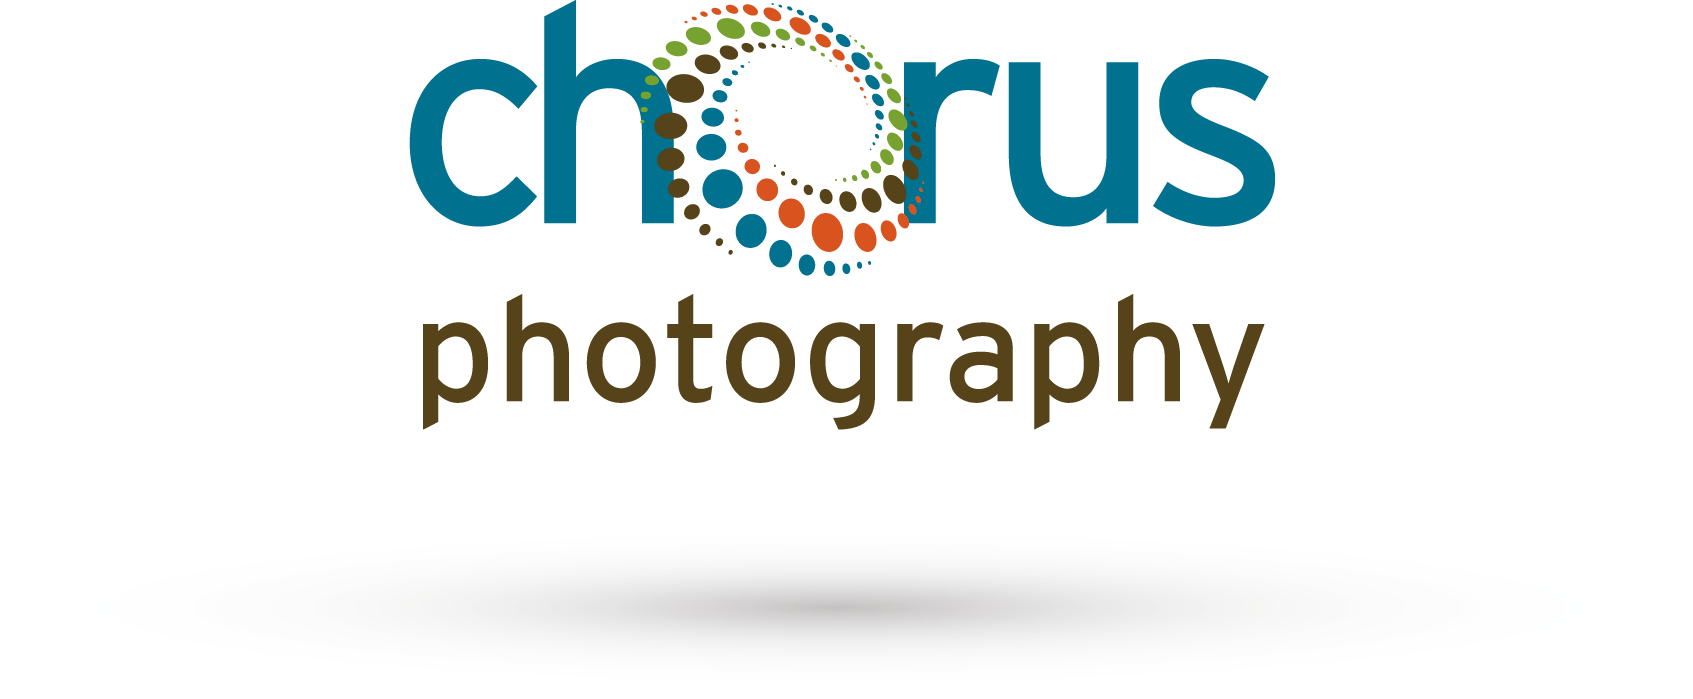 chorus photography logo